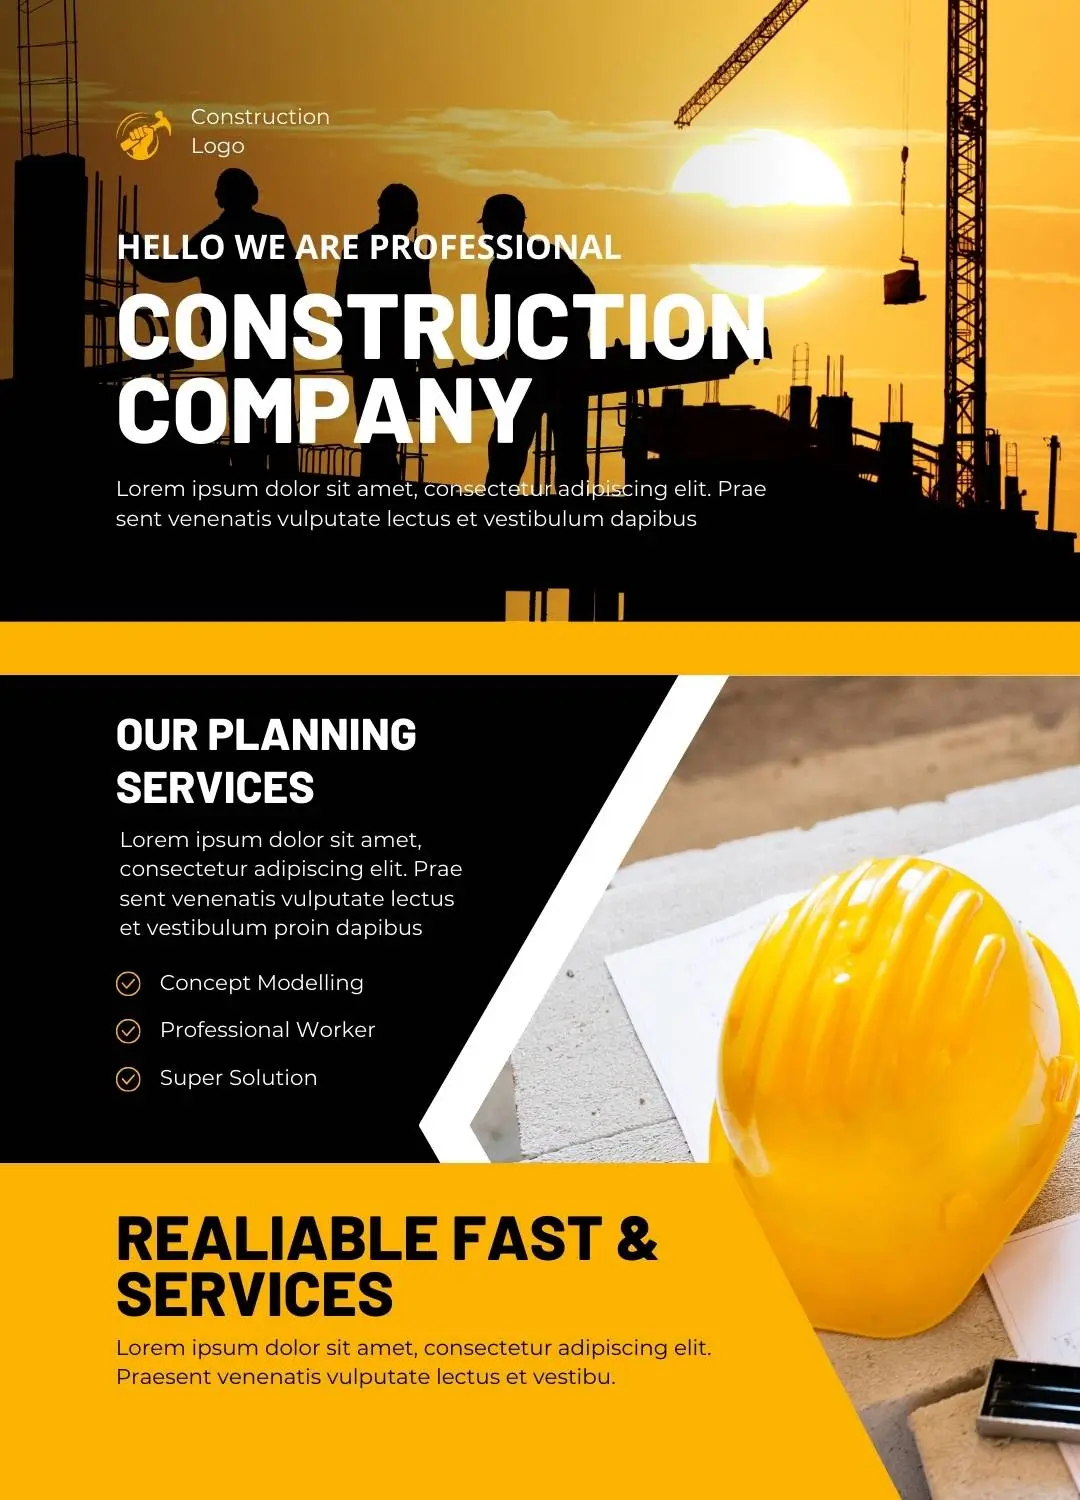 Construction website design